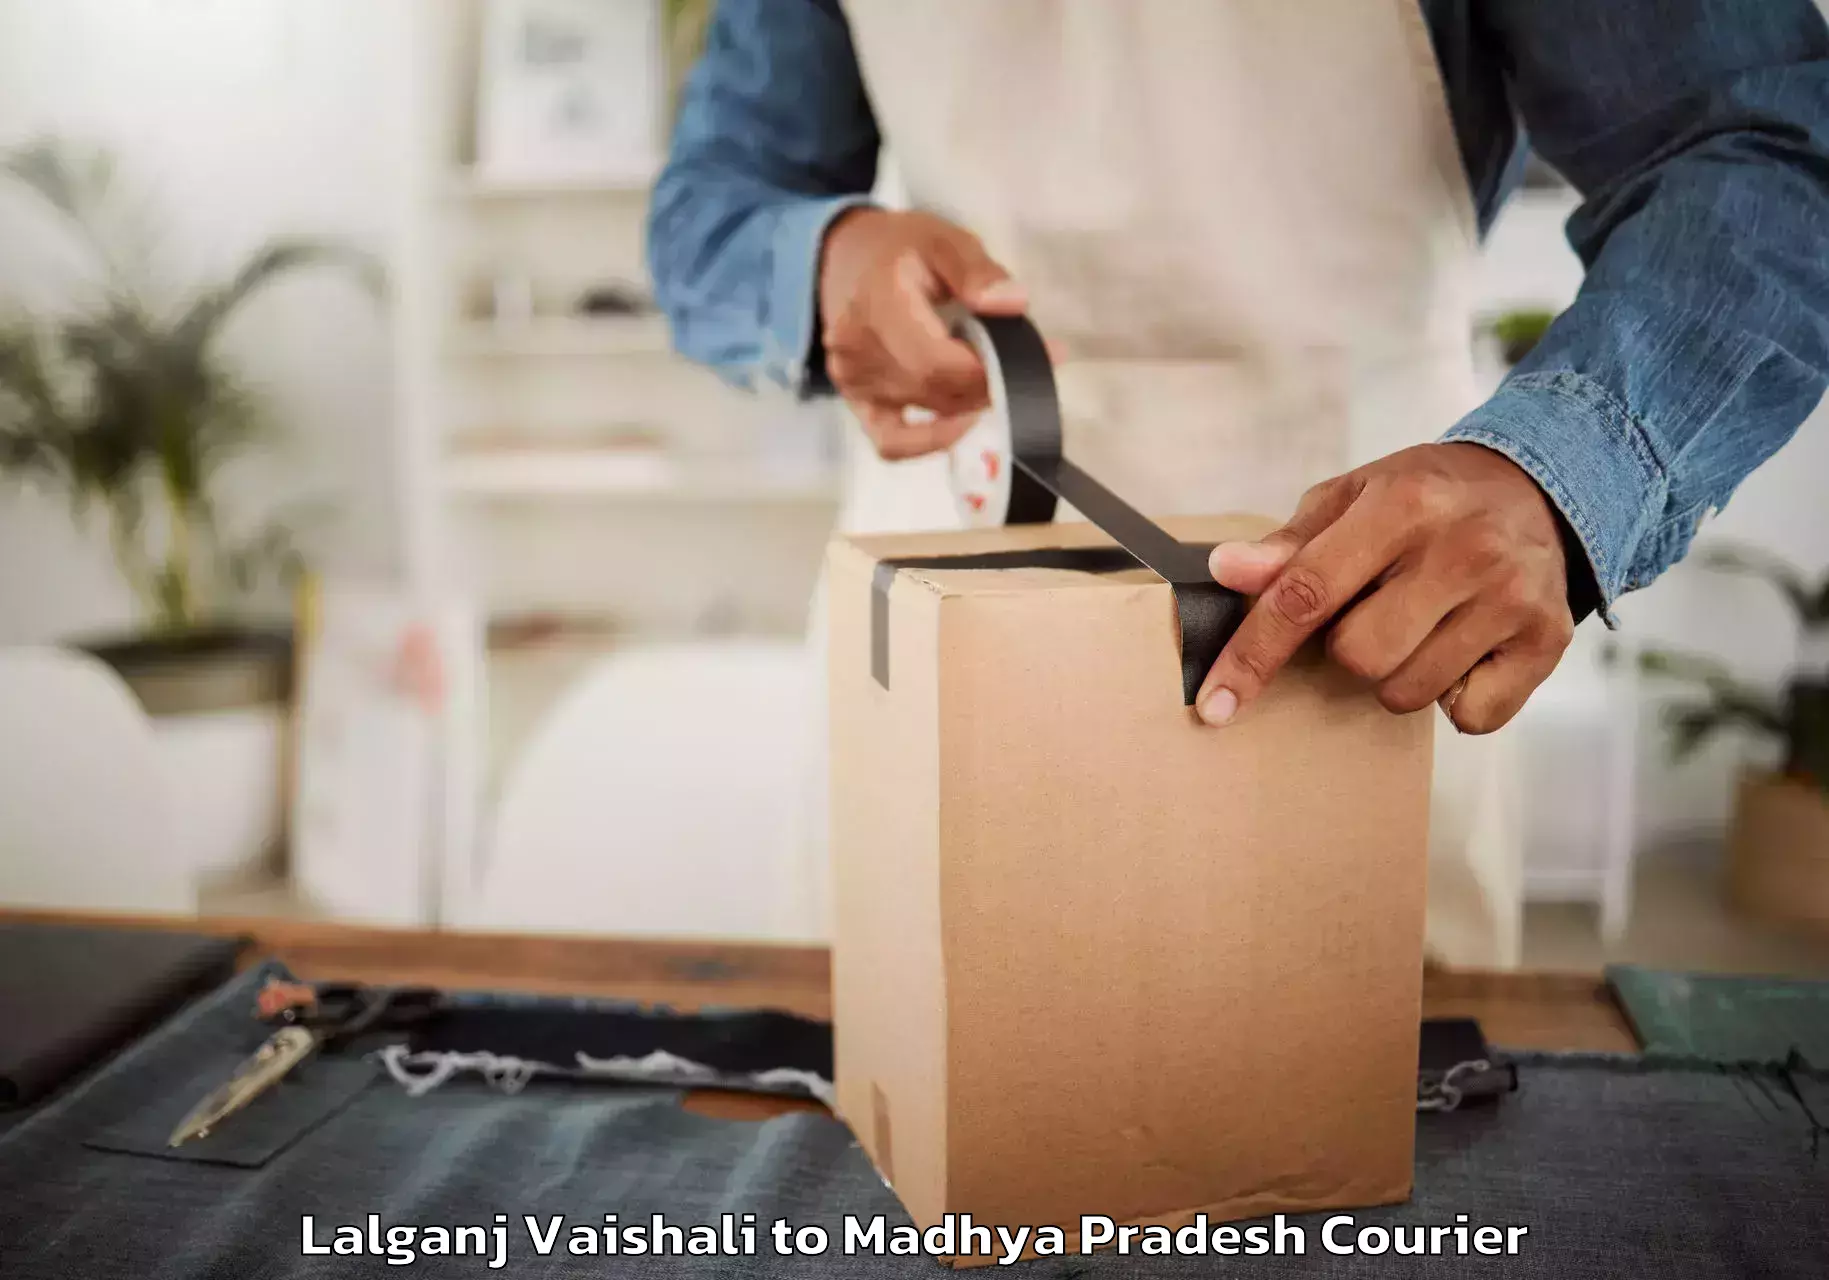 Professional moving company Lalganj Vaishali to Katni